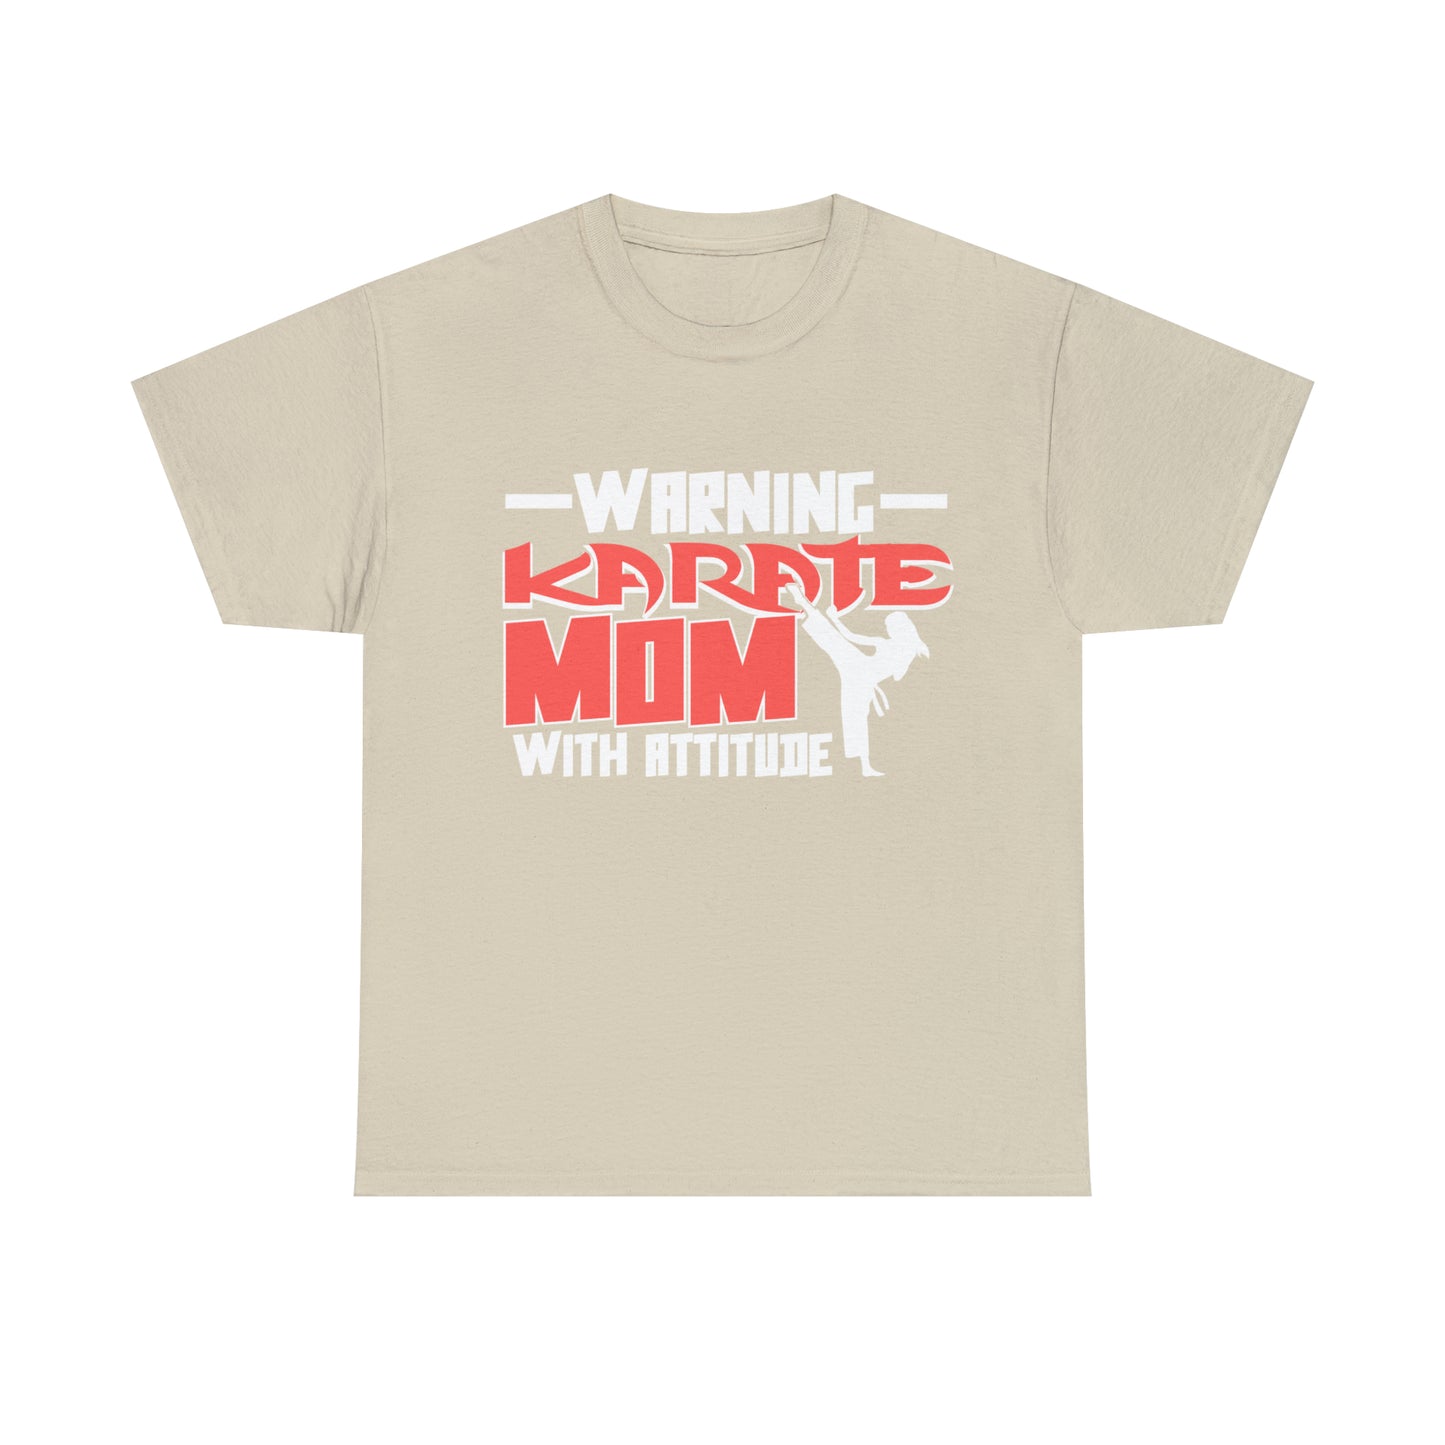 Warning Karate Mom With Attitude! Life Heavy Cotton Tee